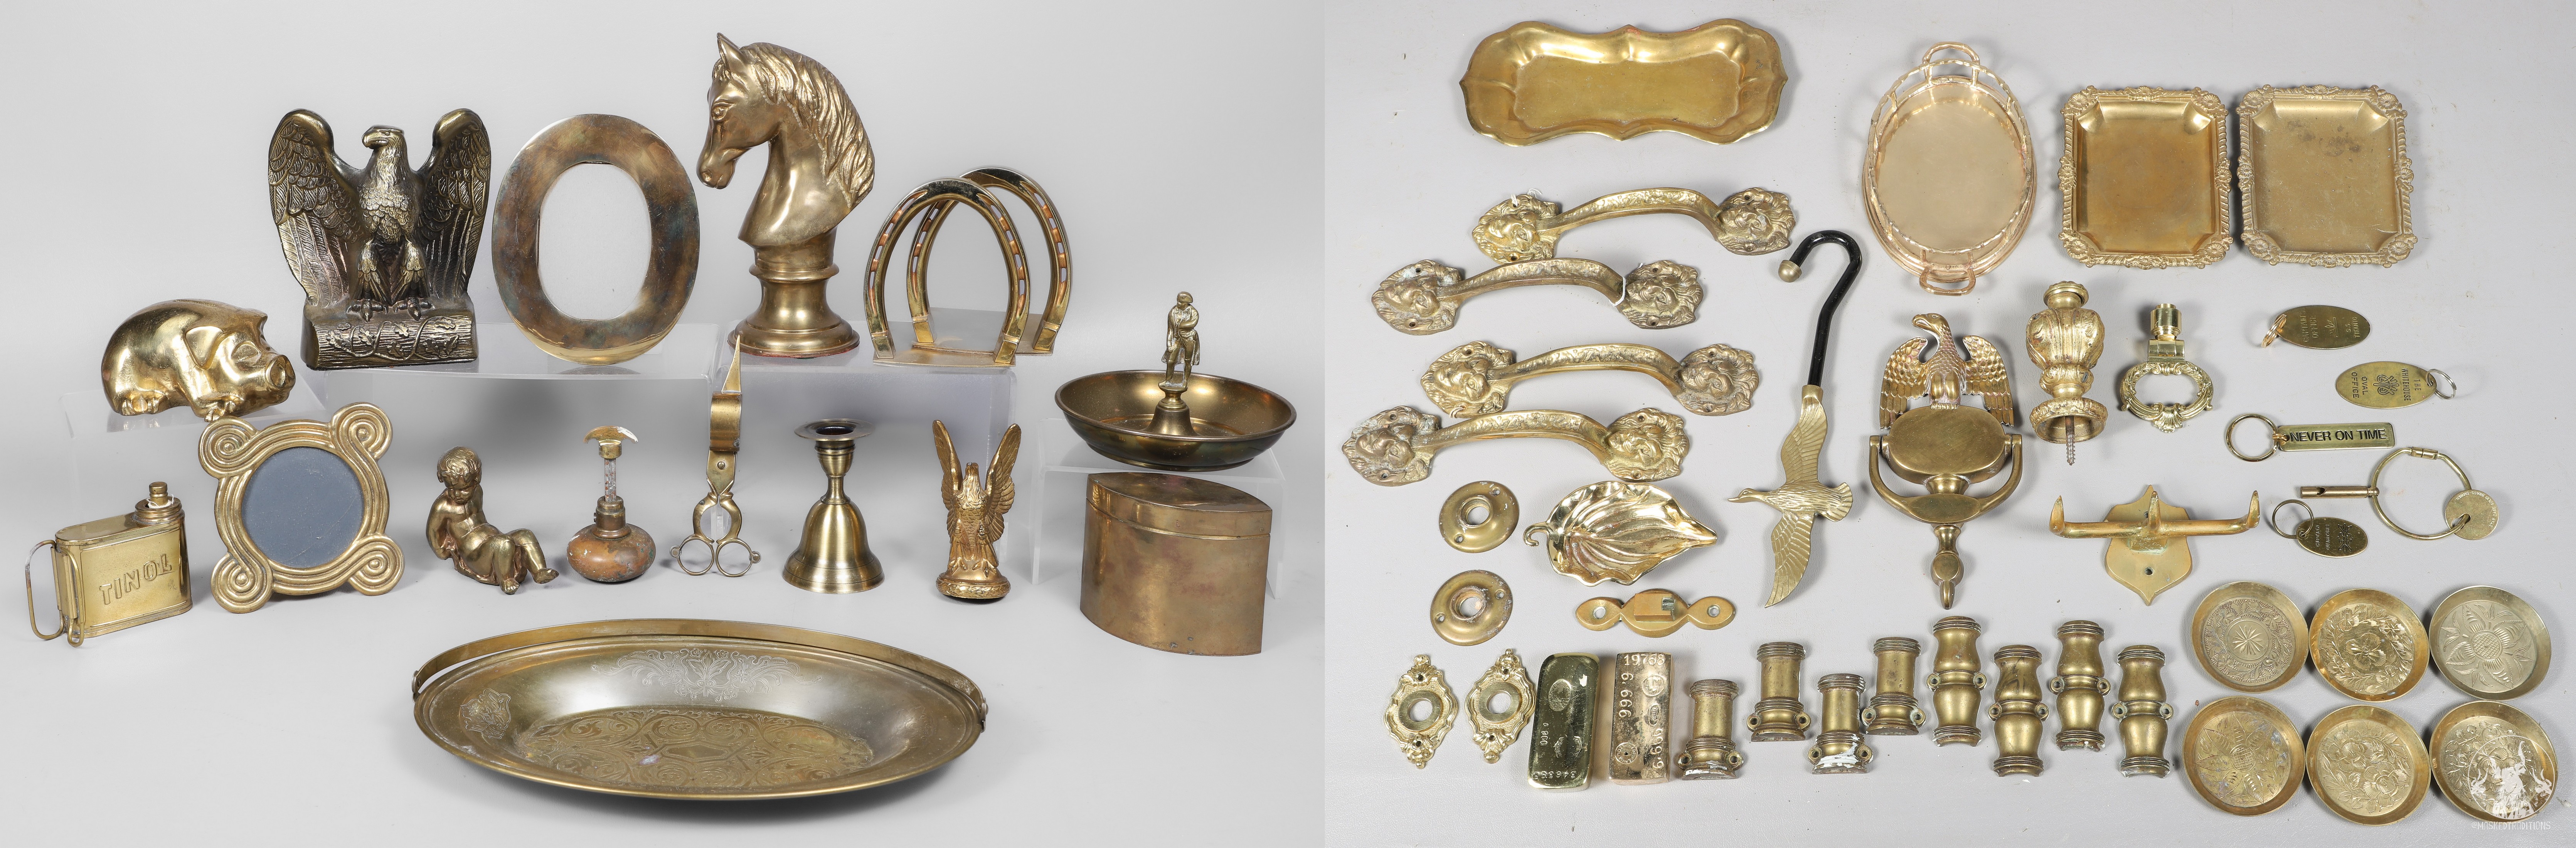 Brass hardware decorative items 2e1403